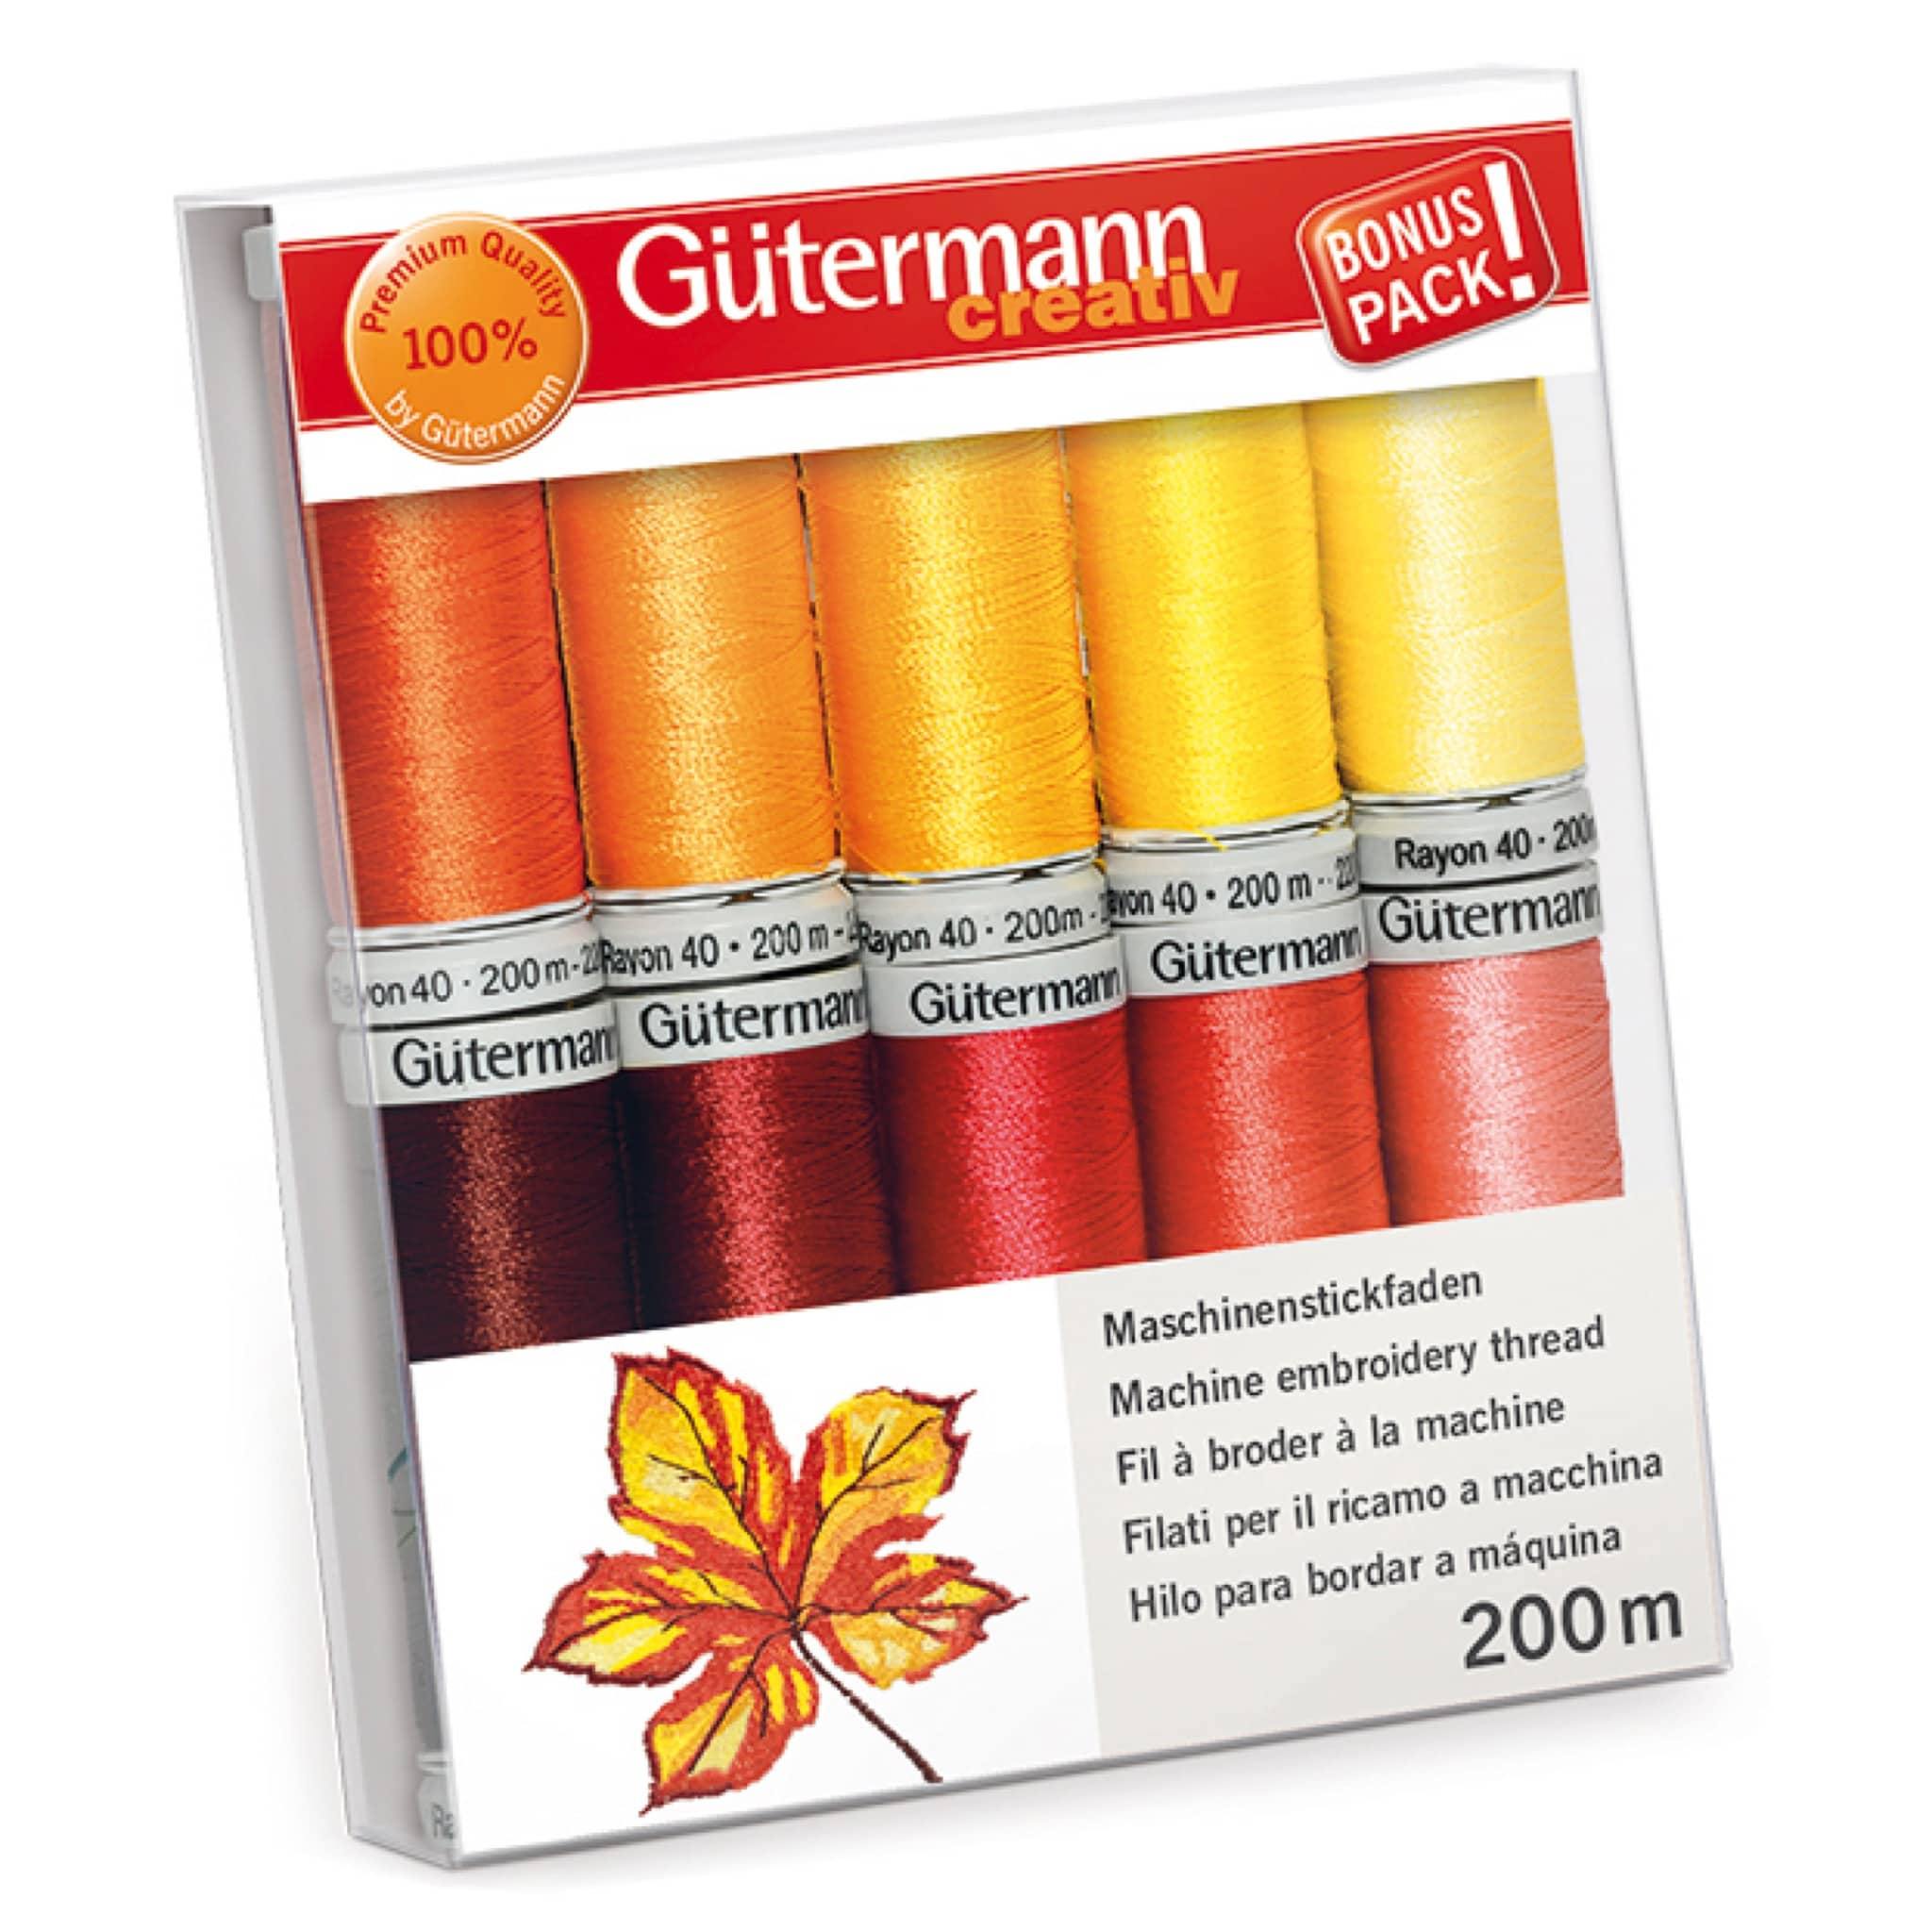 Gutermann Rayon 40 200m Thread Set - Woolshop.co.uk